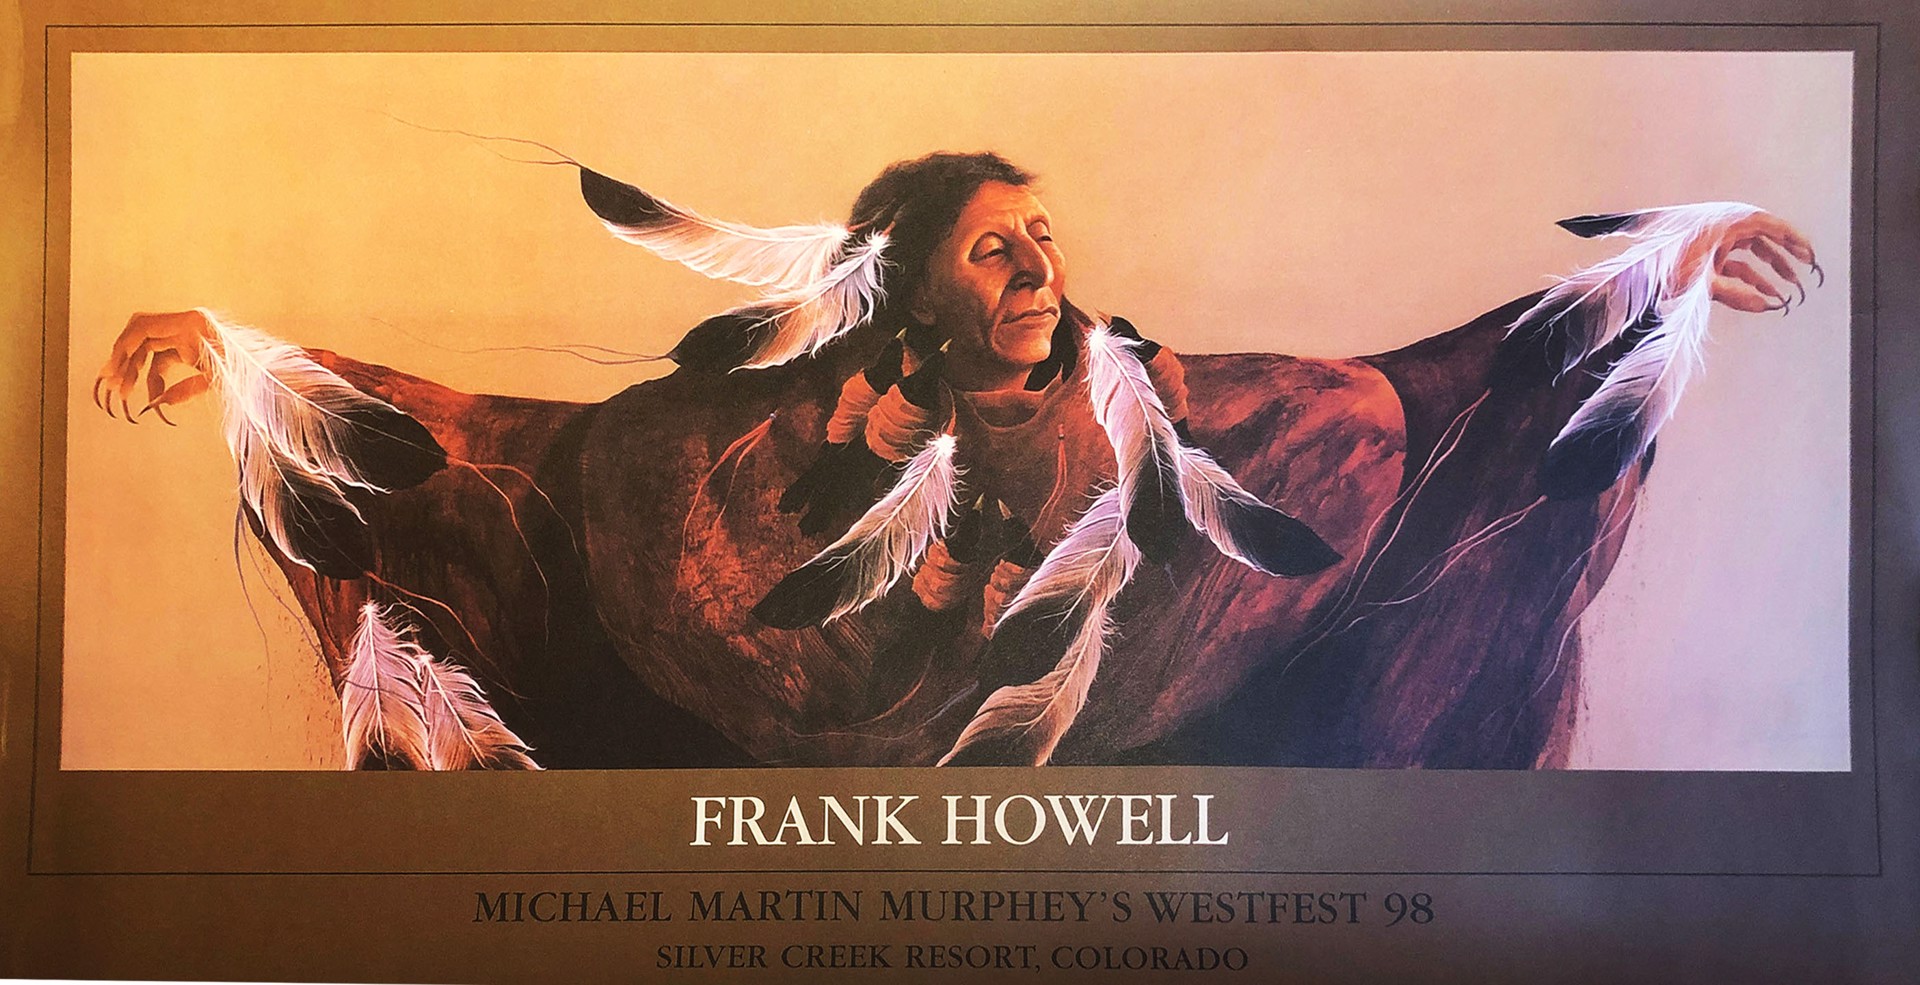 Michael Martin Murphey's Westfest 98 Poster by Frank Howell